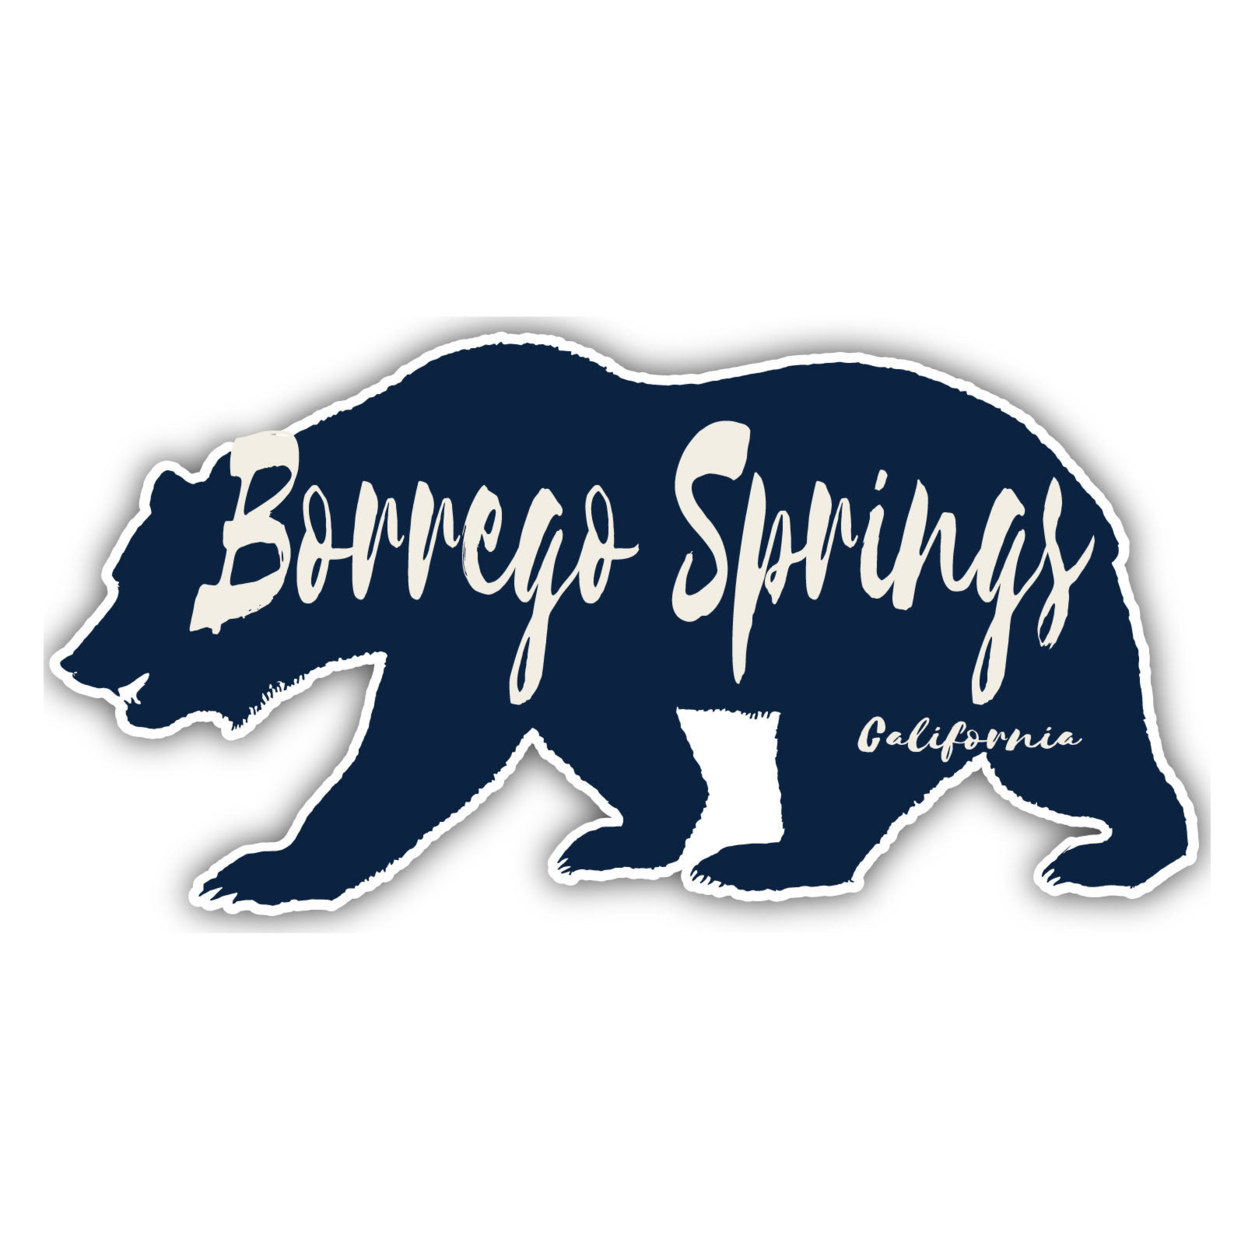 Borrego Springs California Souvenir Decorative Stickers (Choose Theme And Size) - Single Unit, 6-Inch, Bear